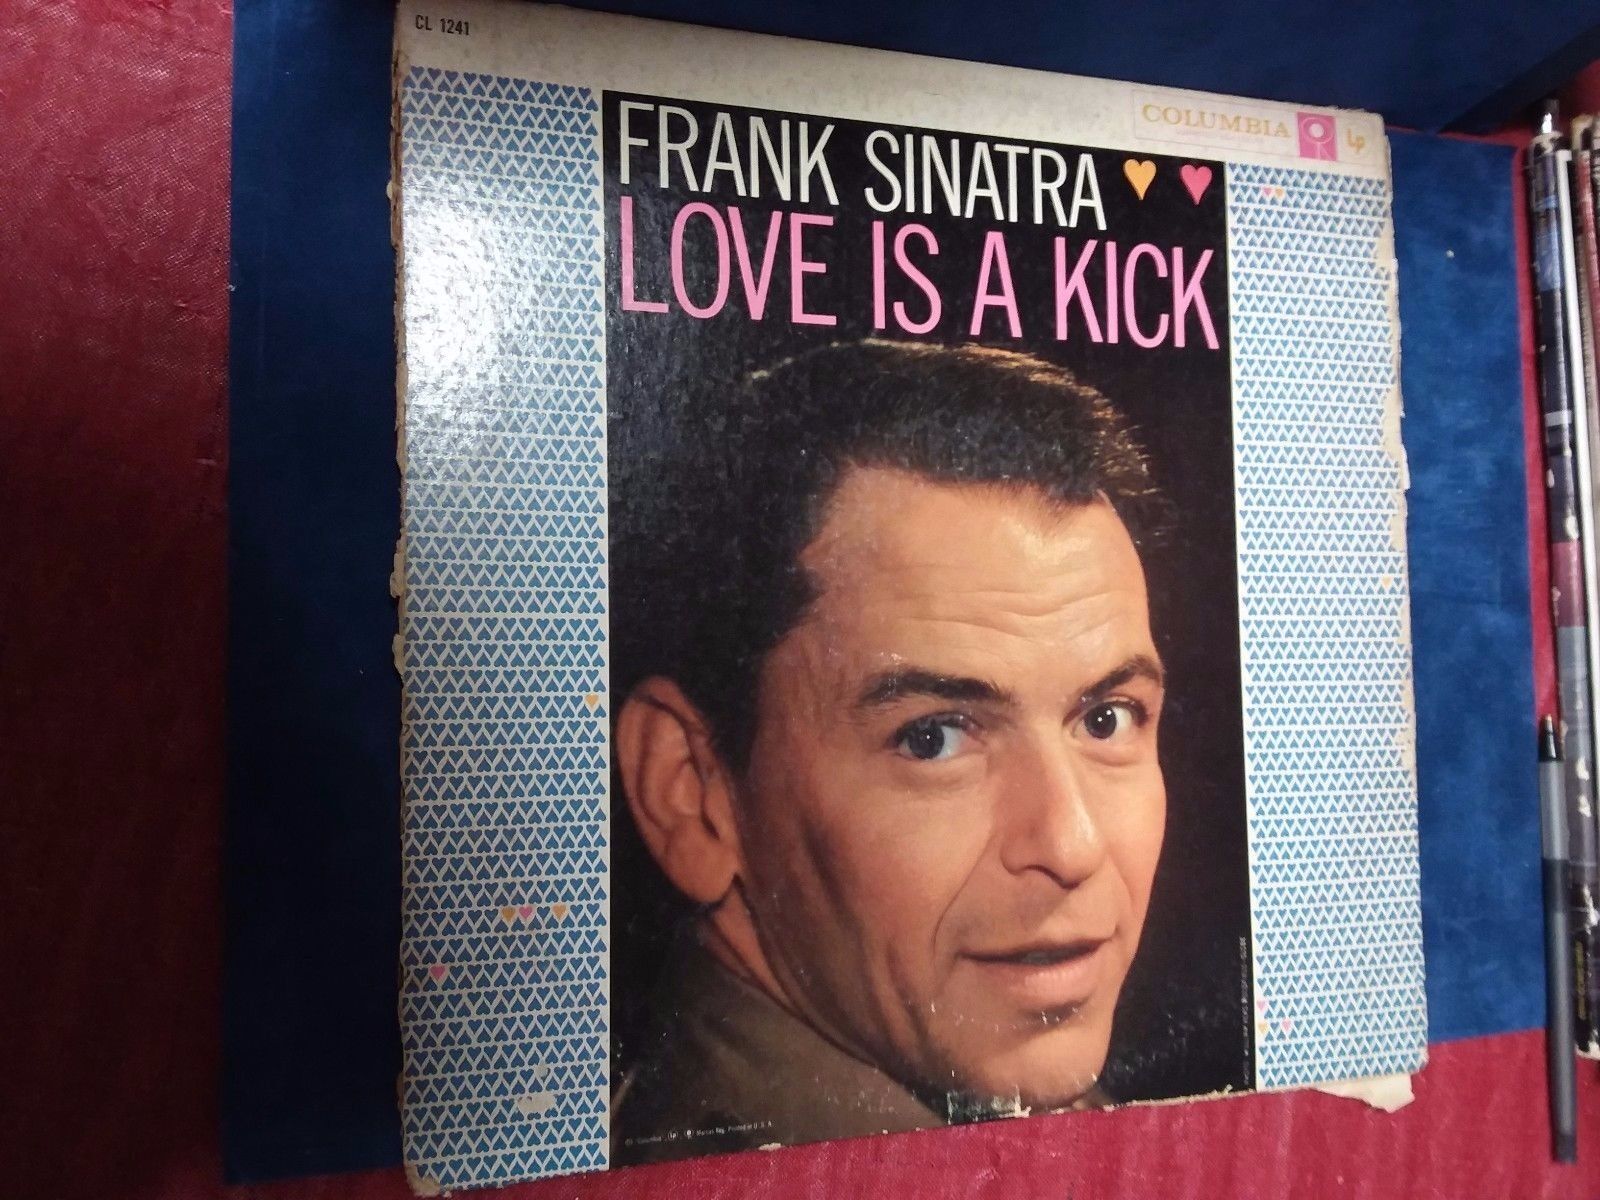 VINYL RECORD LP FRANK SINATRA LOVE IS A KICK